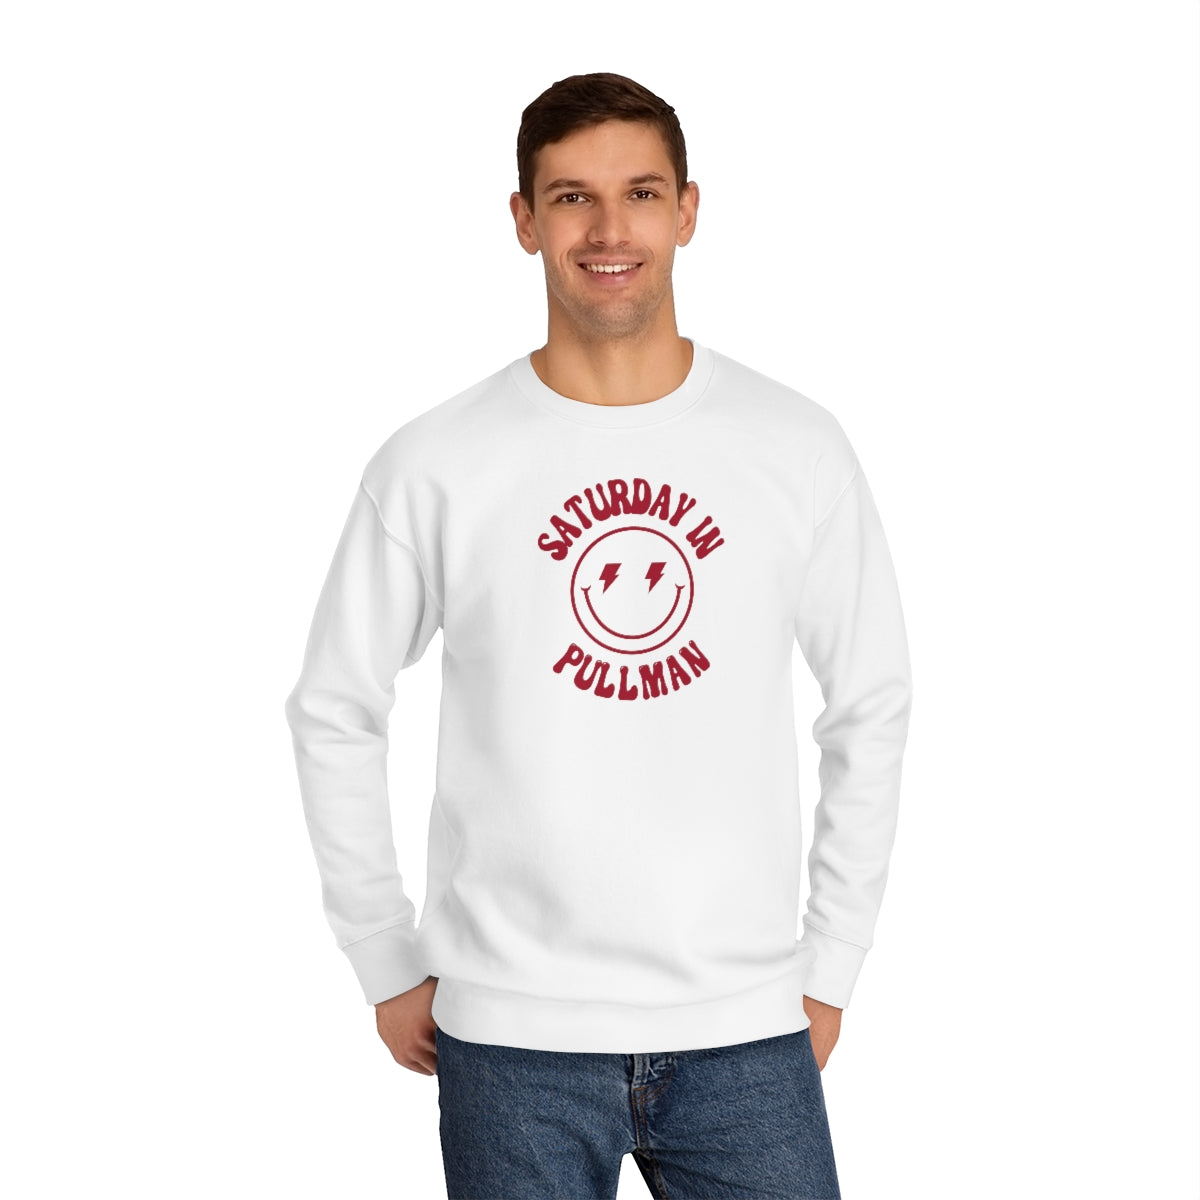 Smiley Pullman Crew Sweatshirt - GG - CH